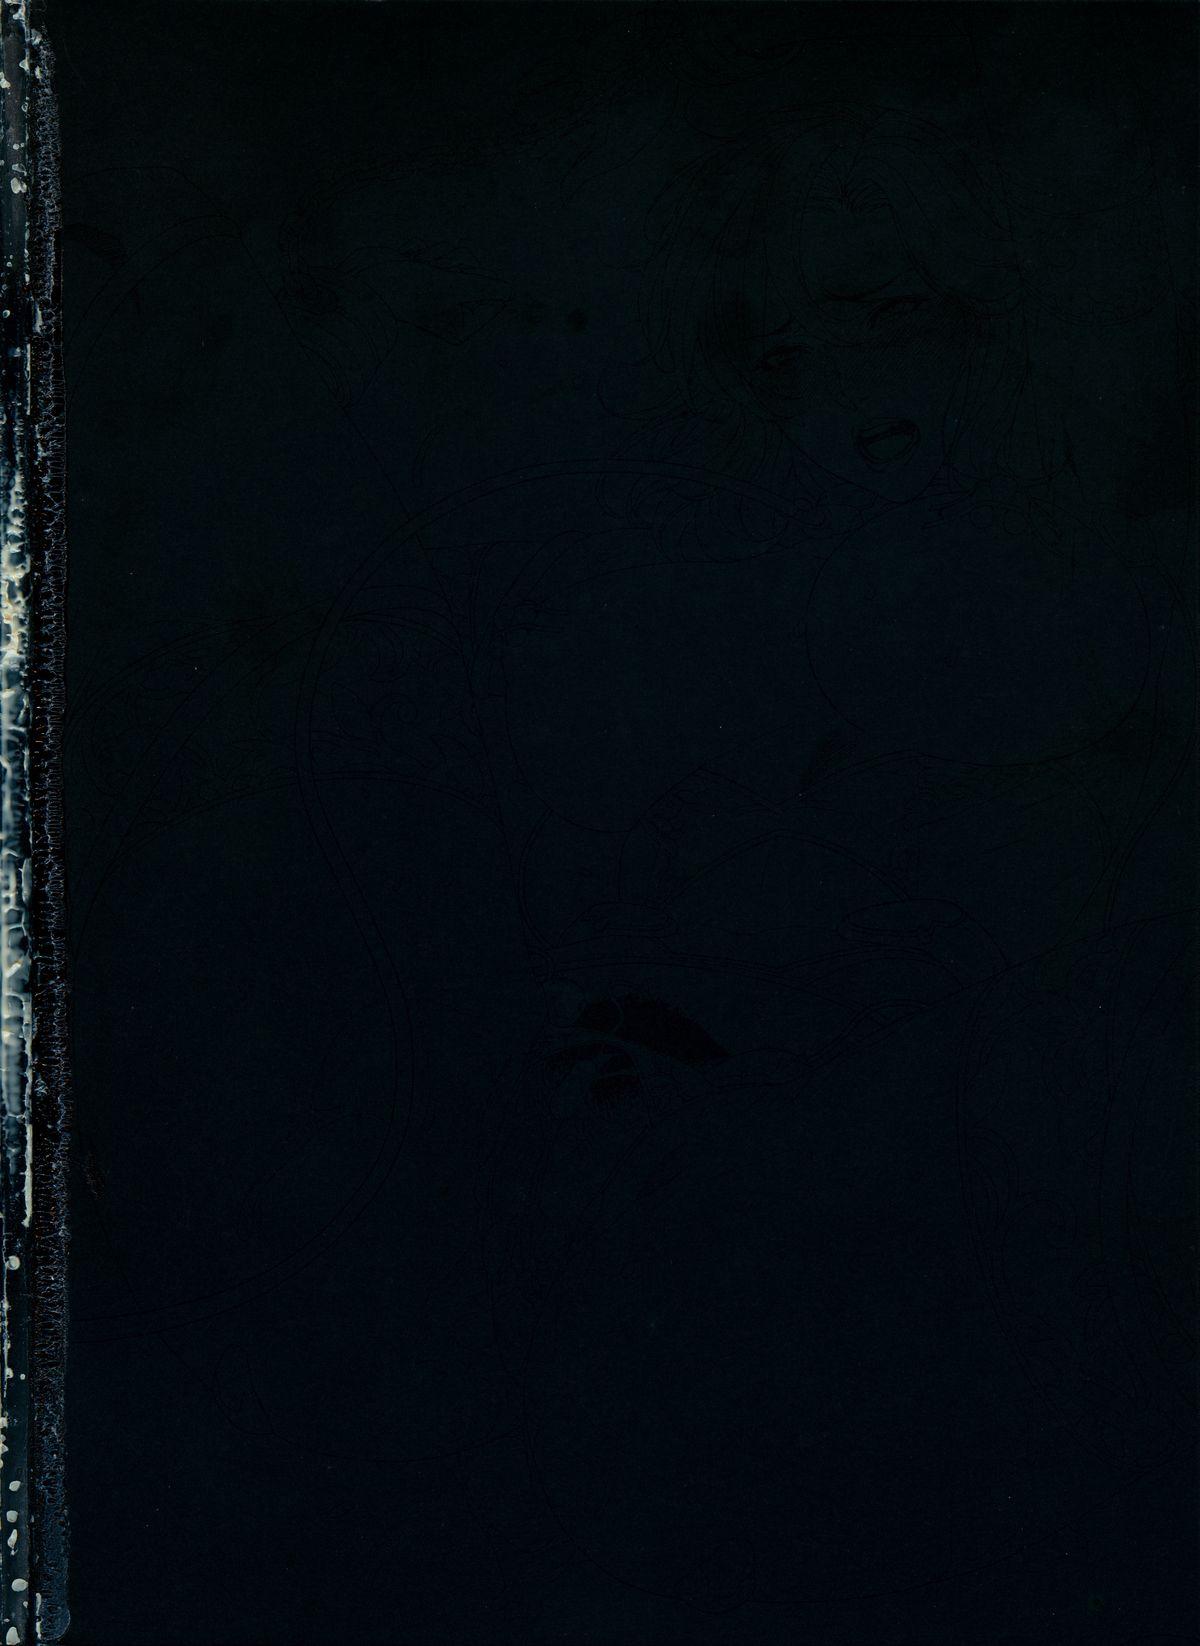 [Oda Non] NON VIRGIN 【Limited Edition】 CHRONICLE-FULLCOLOR BOOKLET-SIDE:MELON + NON VIRGIN LINE WORKS + Postcard 43